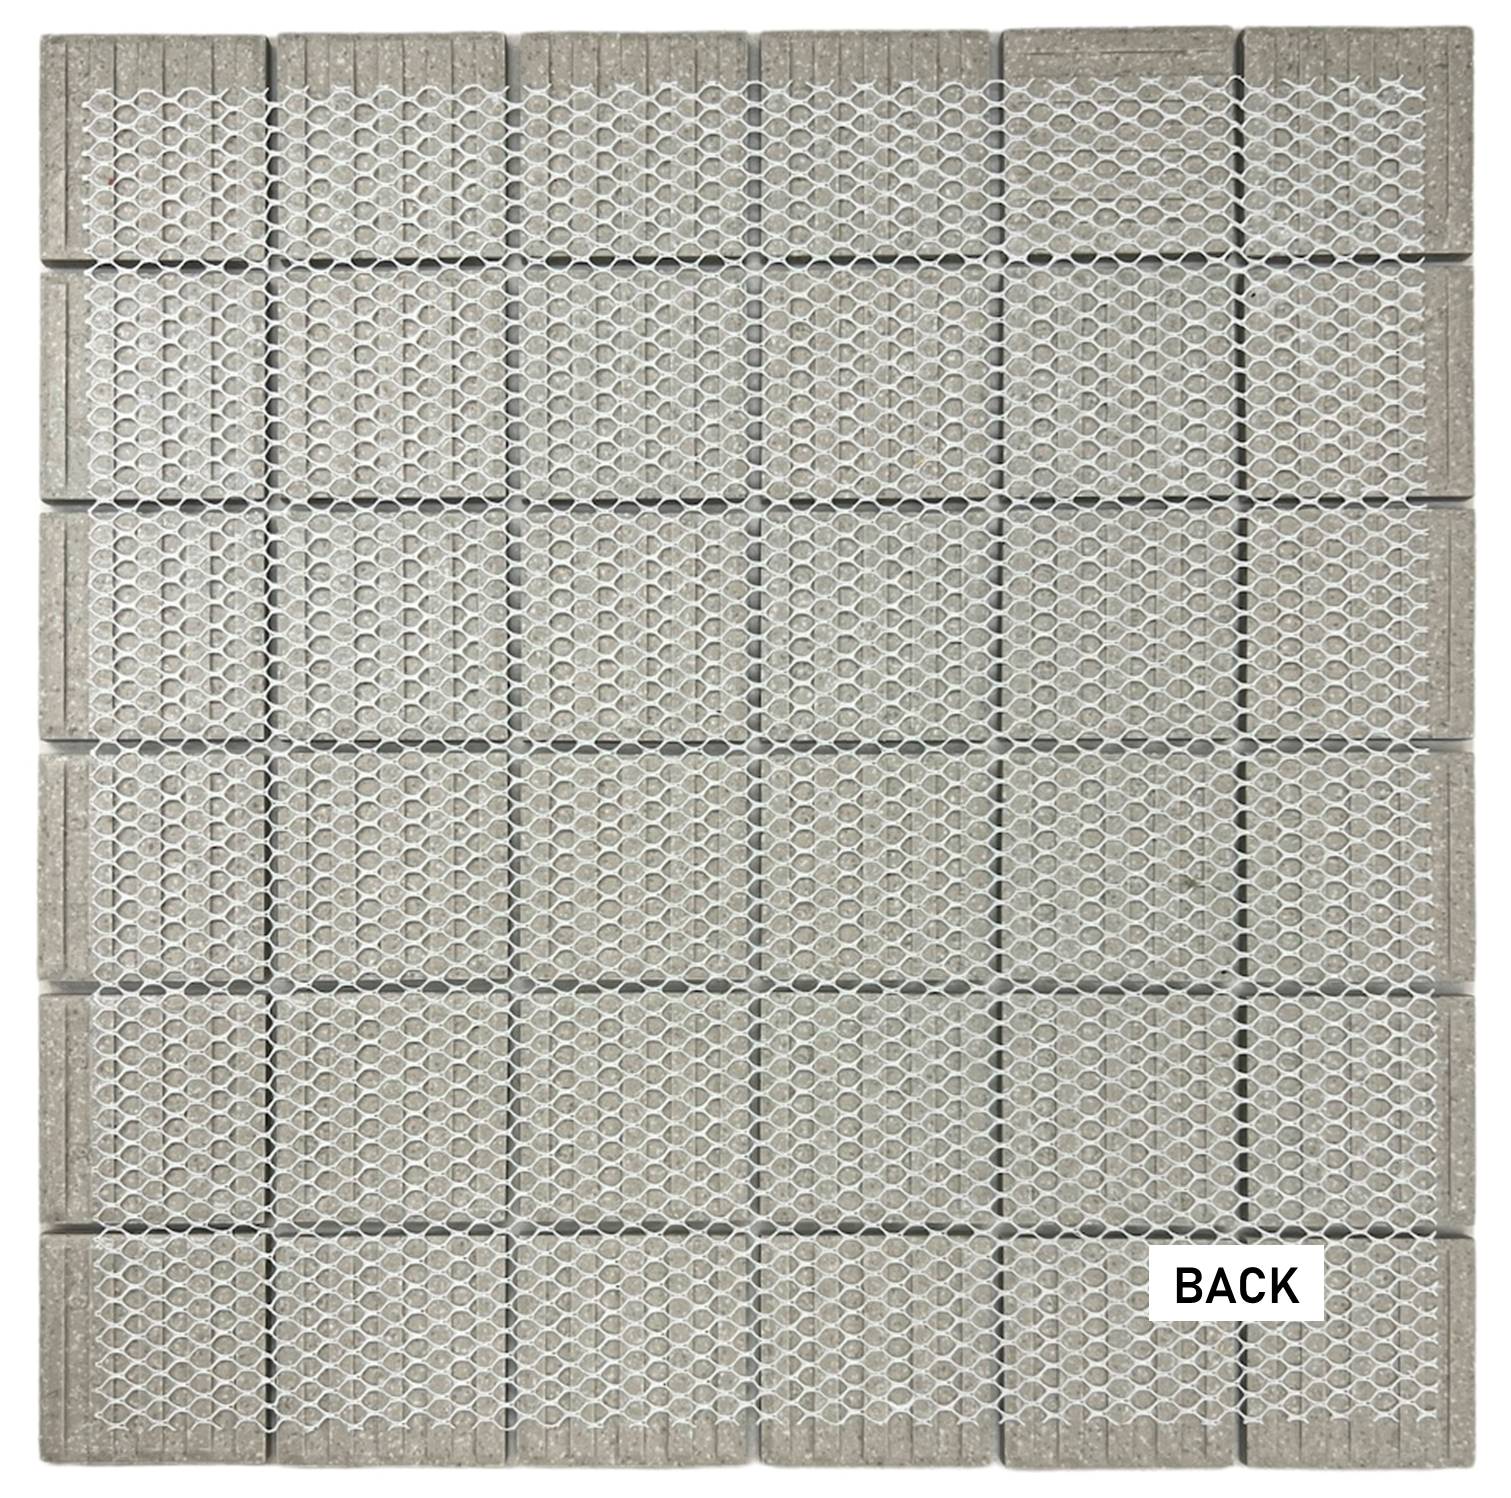 Grey Speckled Unglazed Porcelain Mosaic Square 2x2 Inch Porcelain Floor Wall Tile Backsplash Designed in Italy (Box of 5 sq. ft.)